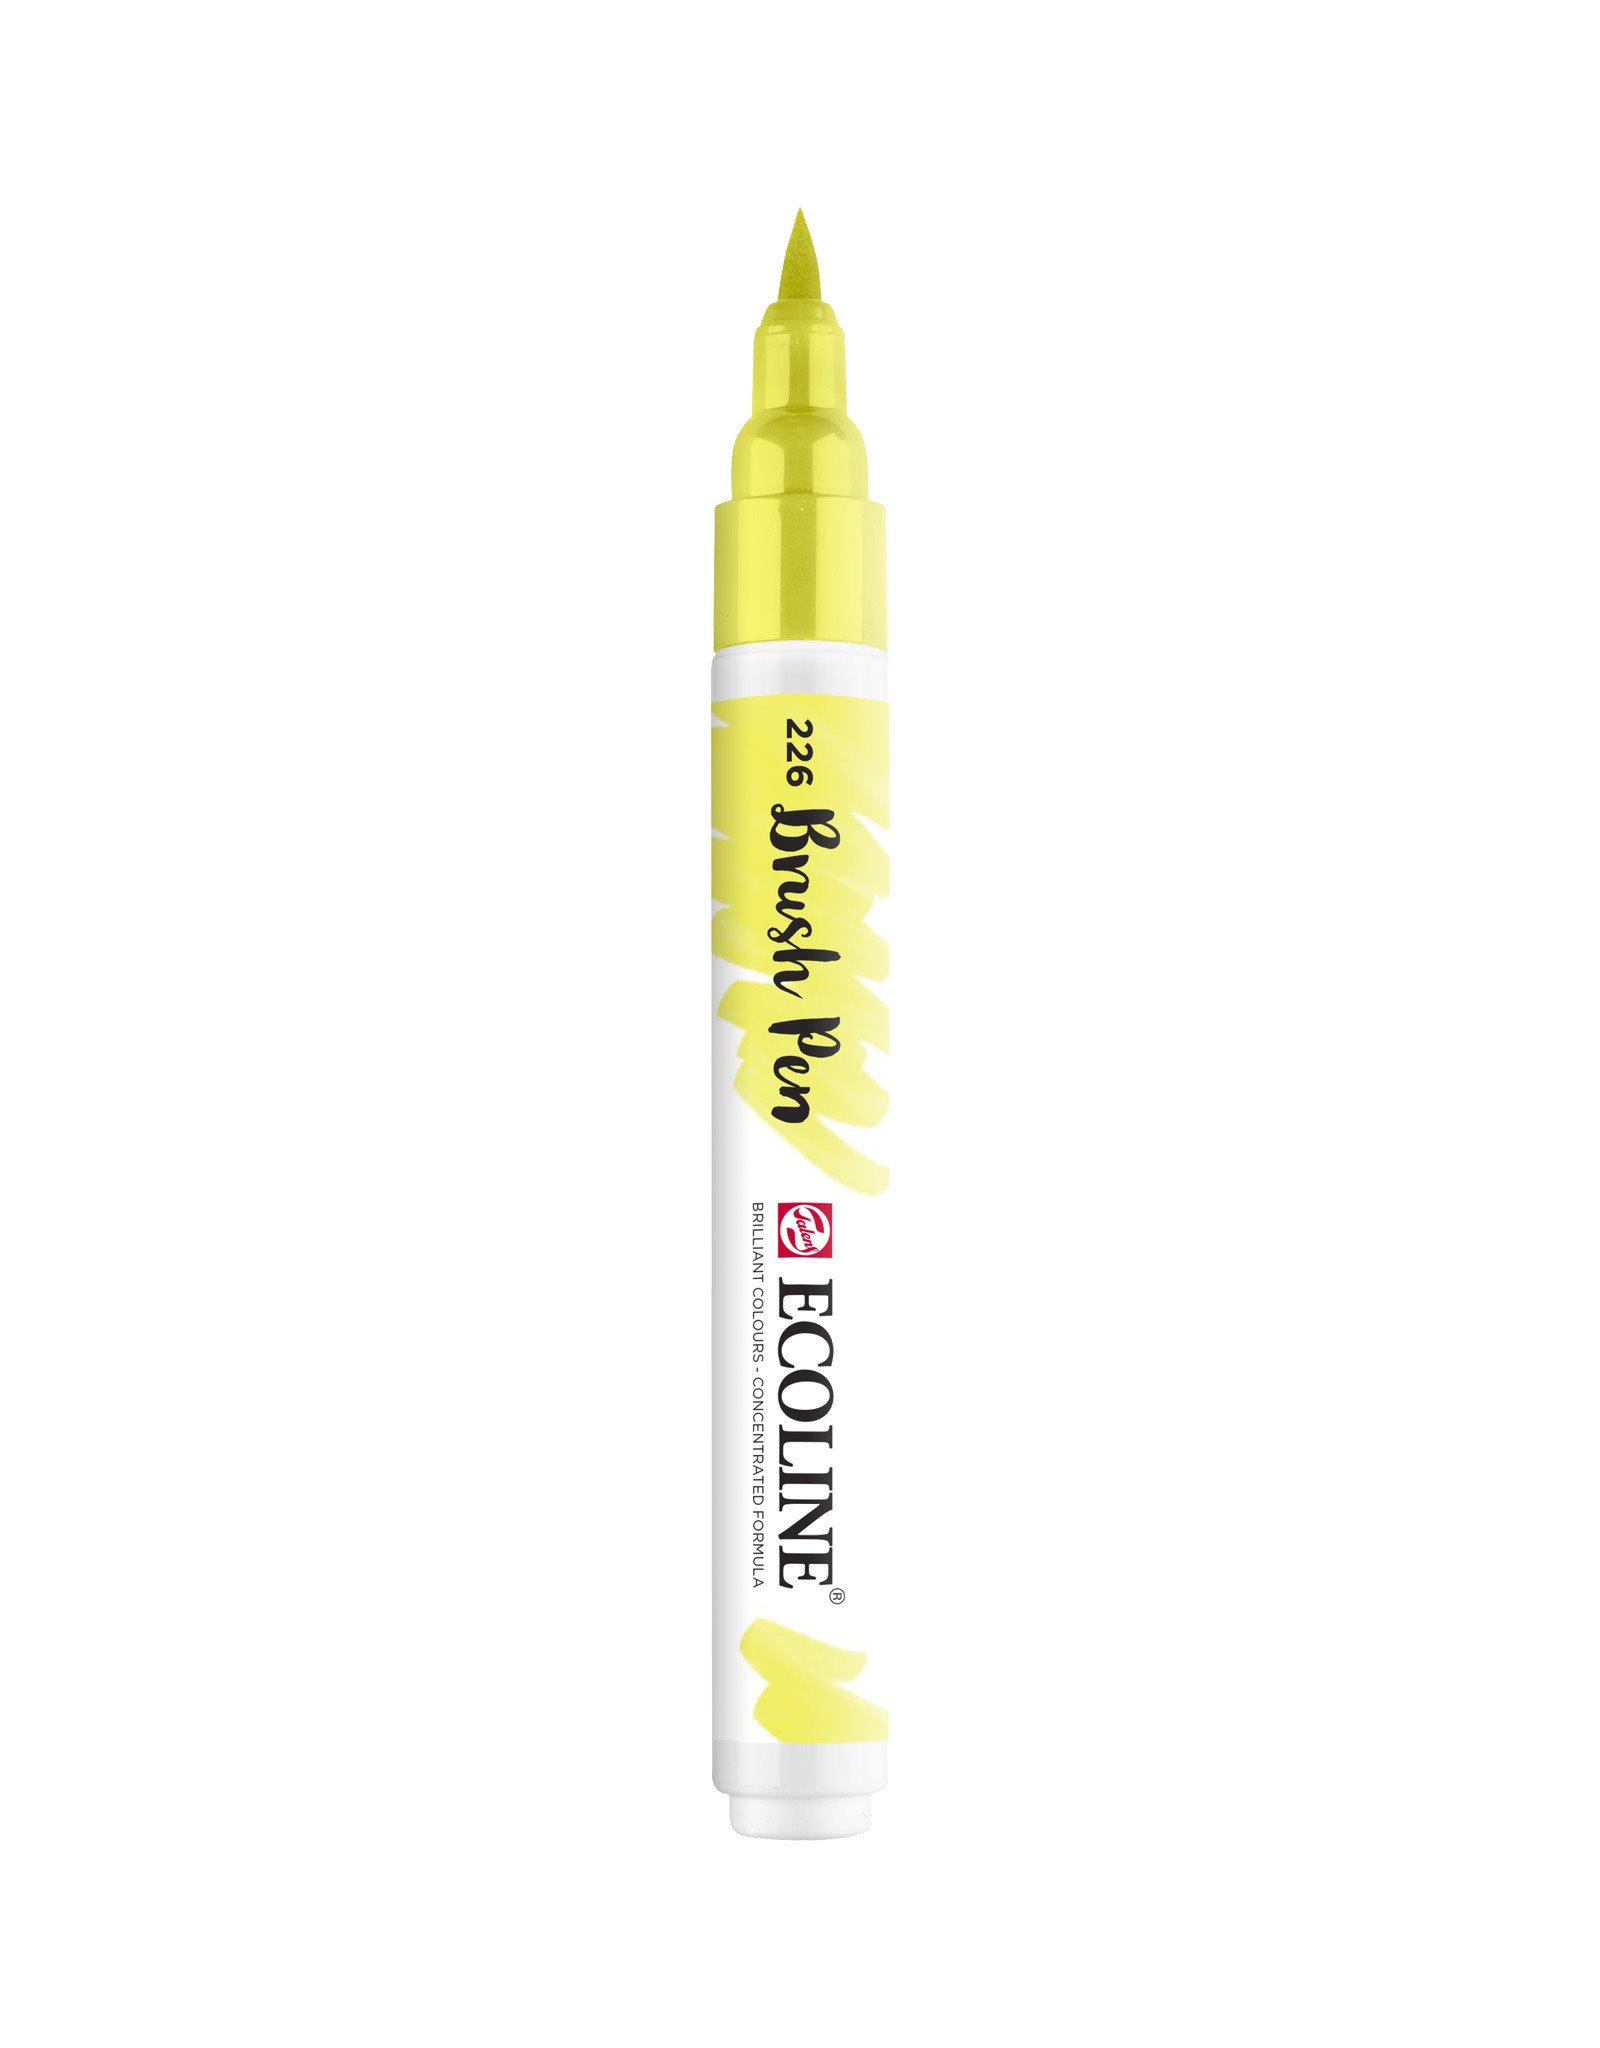 Royal Talens Ecoline Watercolour Brush Pen, Pastel Yellow